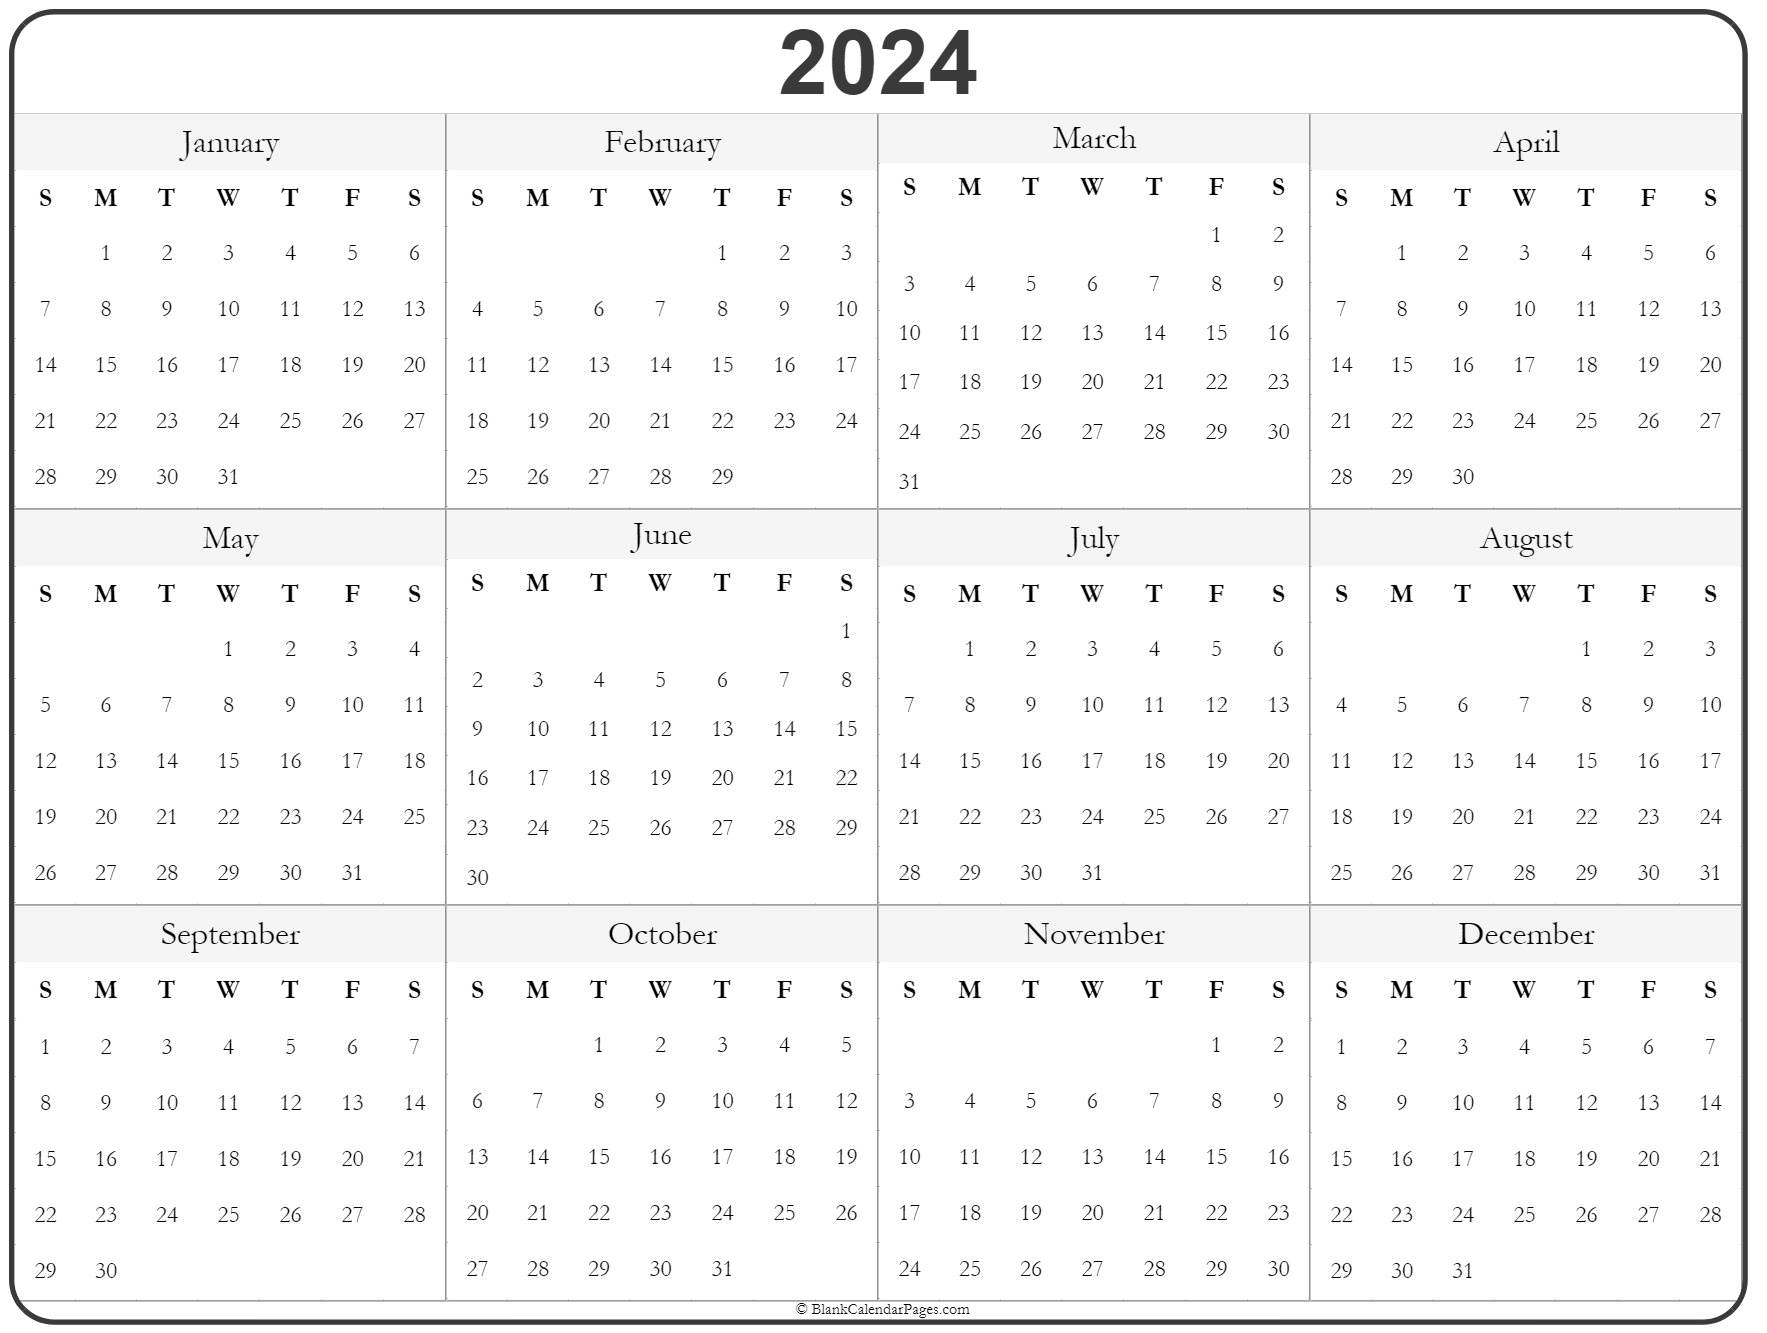 2024 Calendar Printable Cute Free 2024 Yearly Calendar Templates - Free Printable 2024 Yearly Calendar Pdf